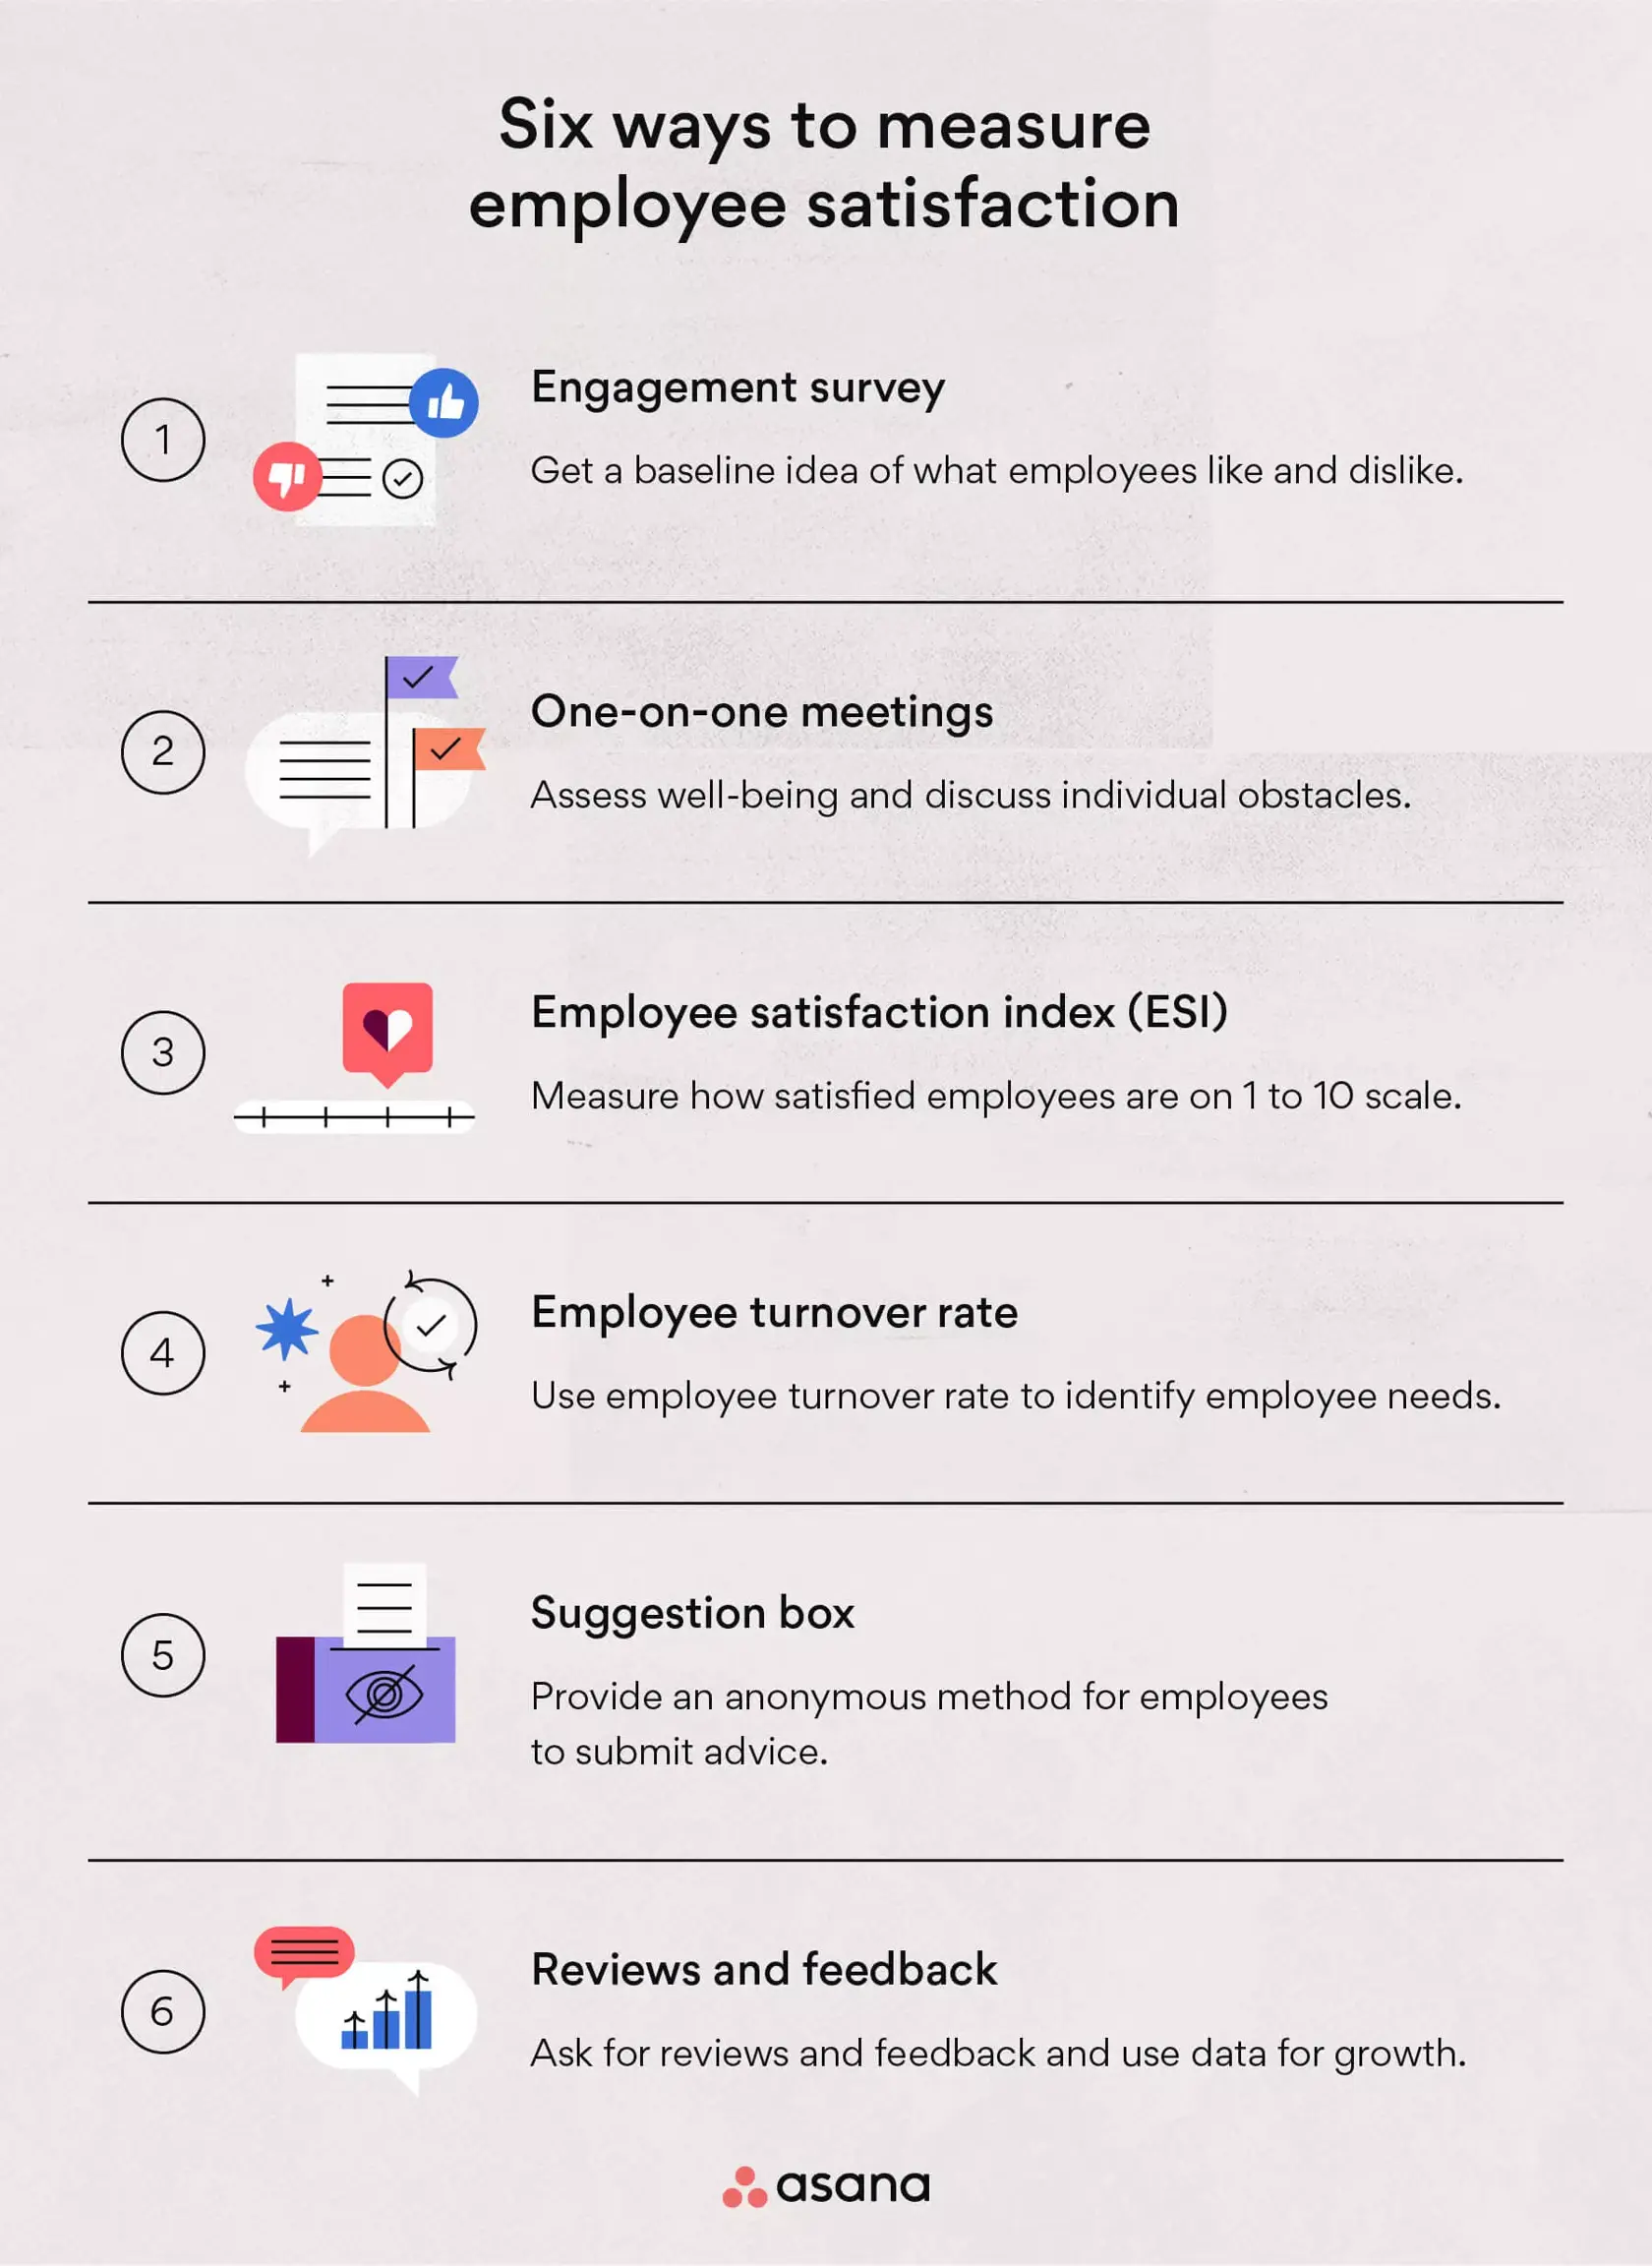 How to measure employee satisfaction